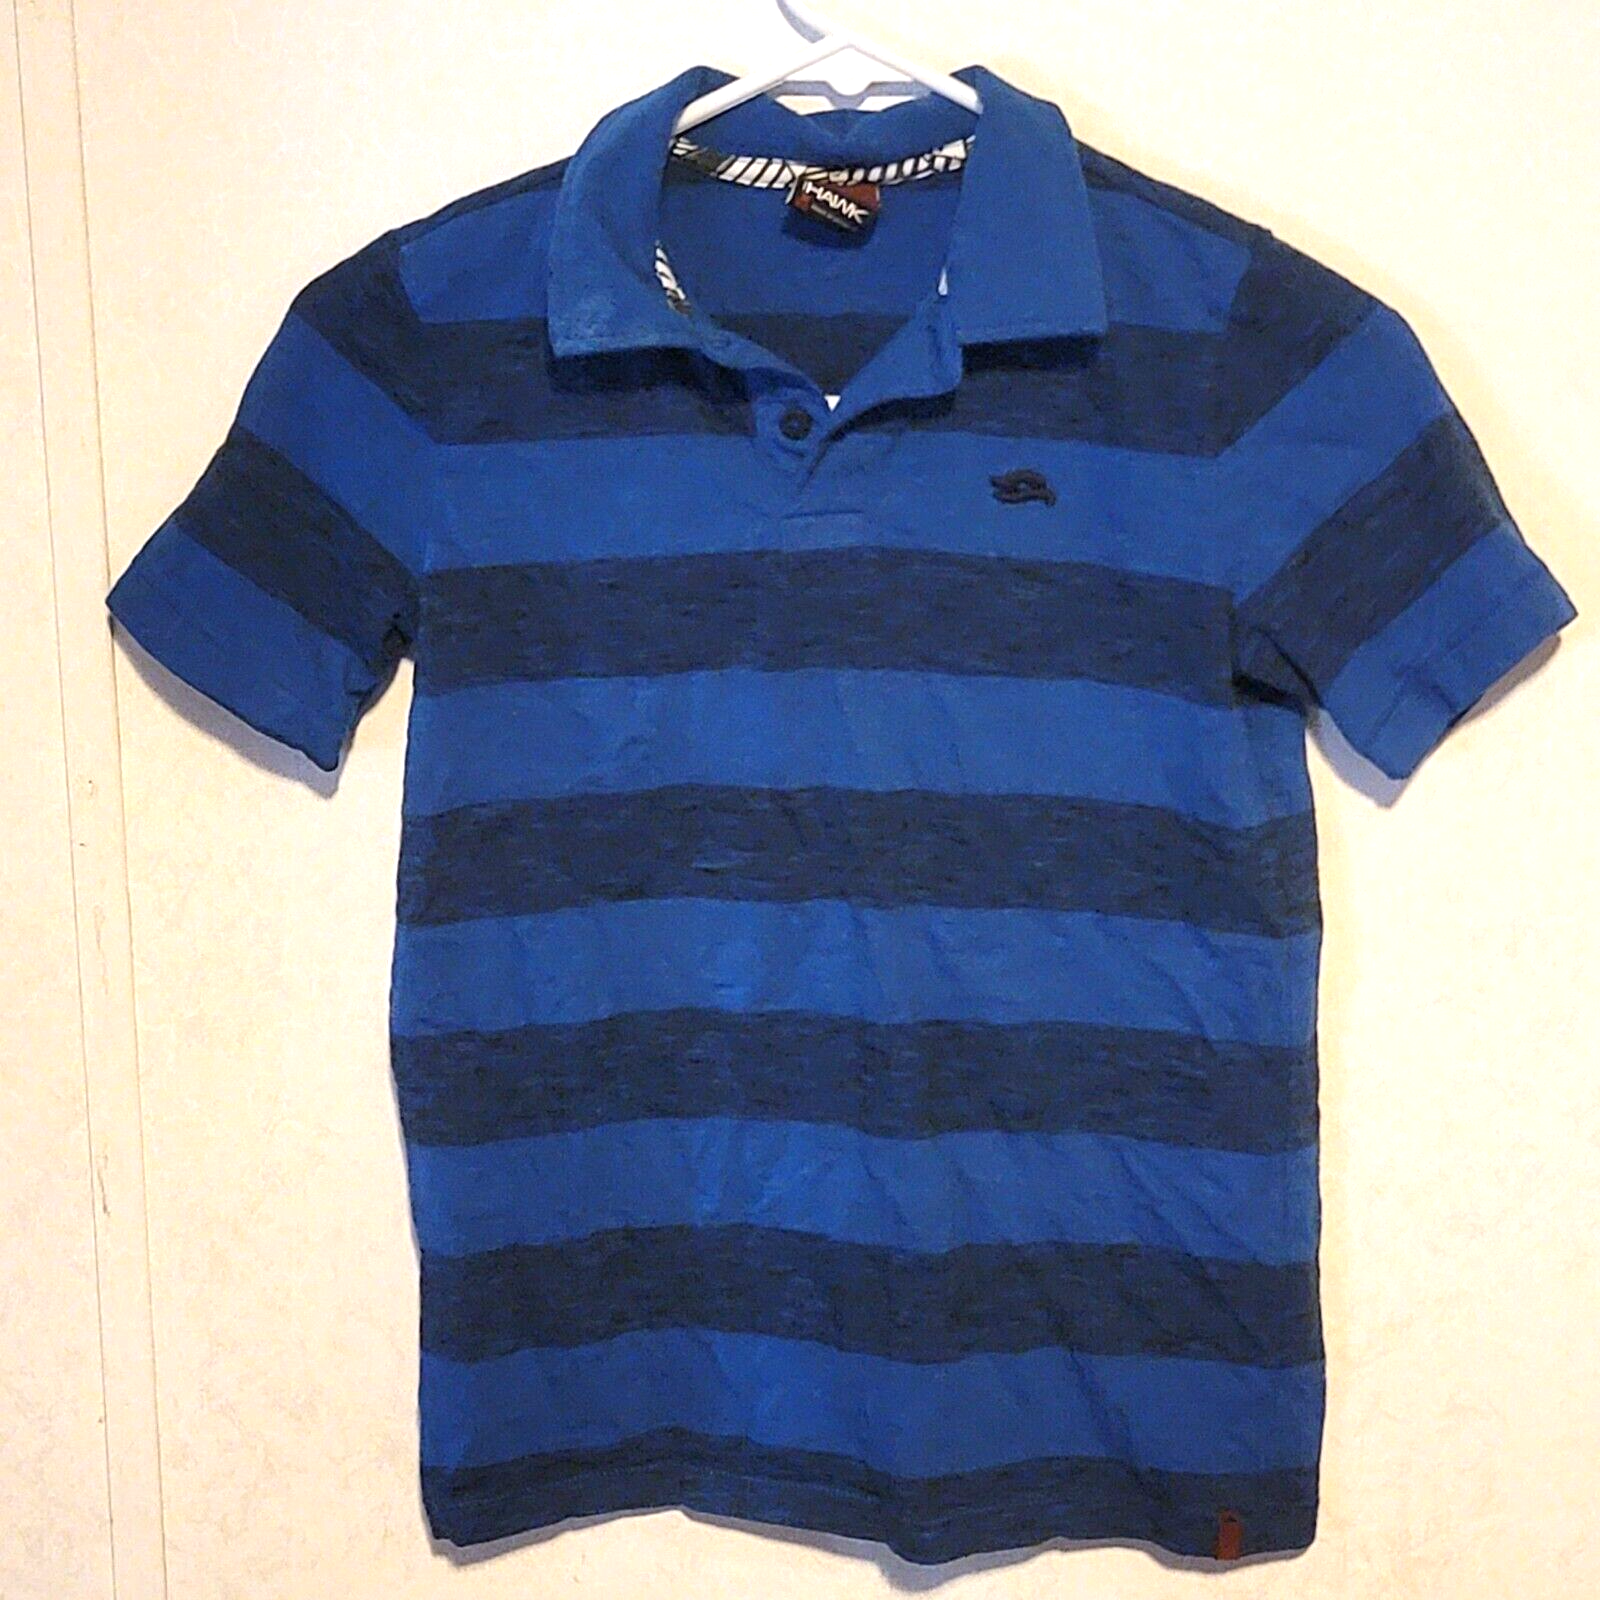 Boys Tony Hawk Polo Blue Striped Button Collar  sz M 10/12 - $8.79